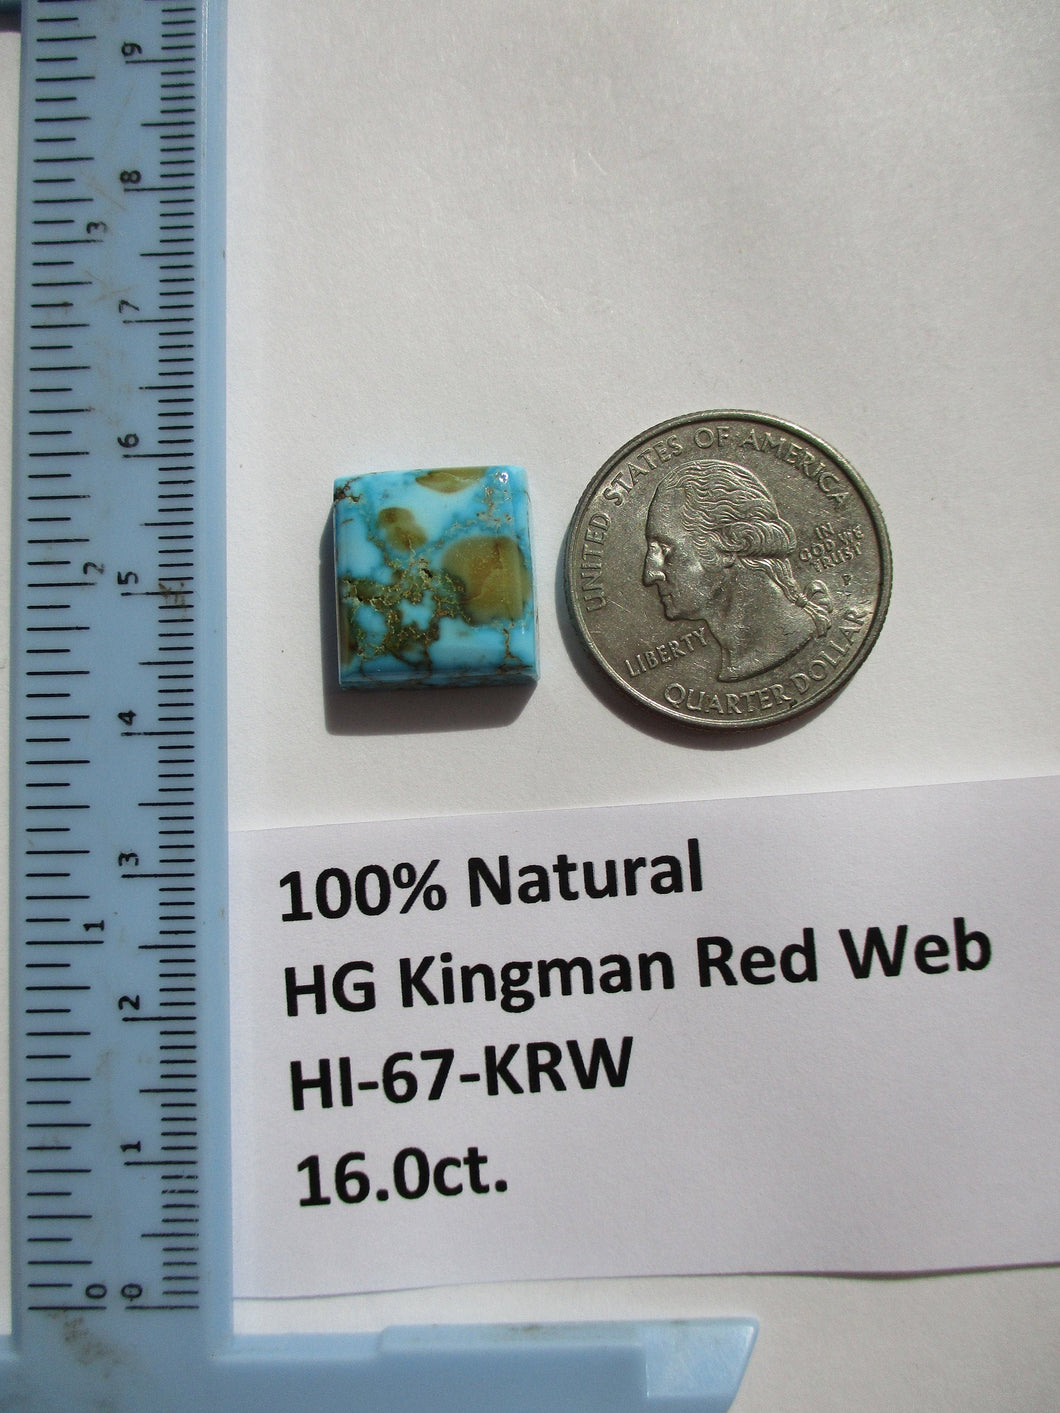 16.0 ct. (16x14.5x6 mm) 100% Natural High Grade Kingman Red Web Polychrome Turquoise Cabochon Gemstone, # HI 67